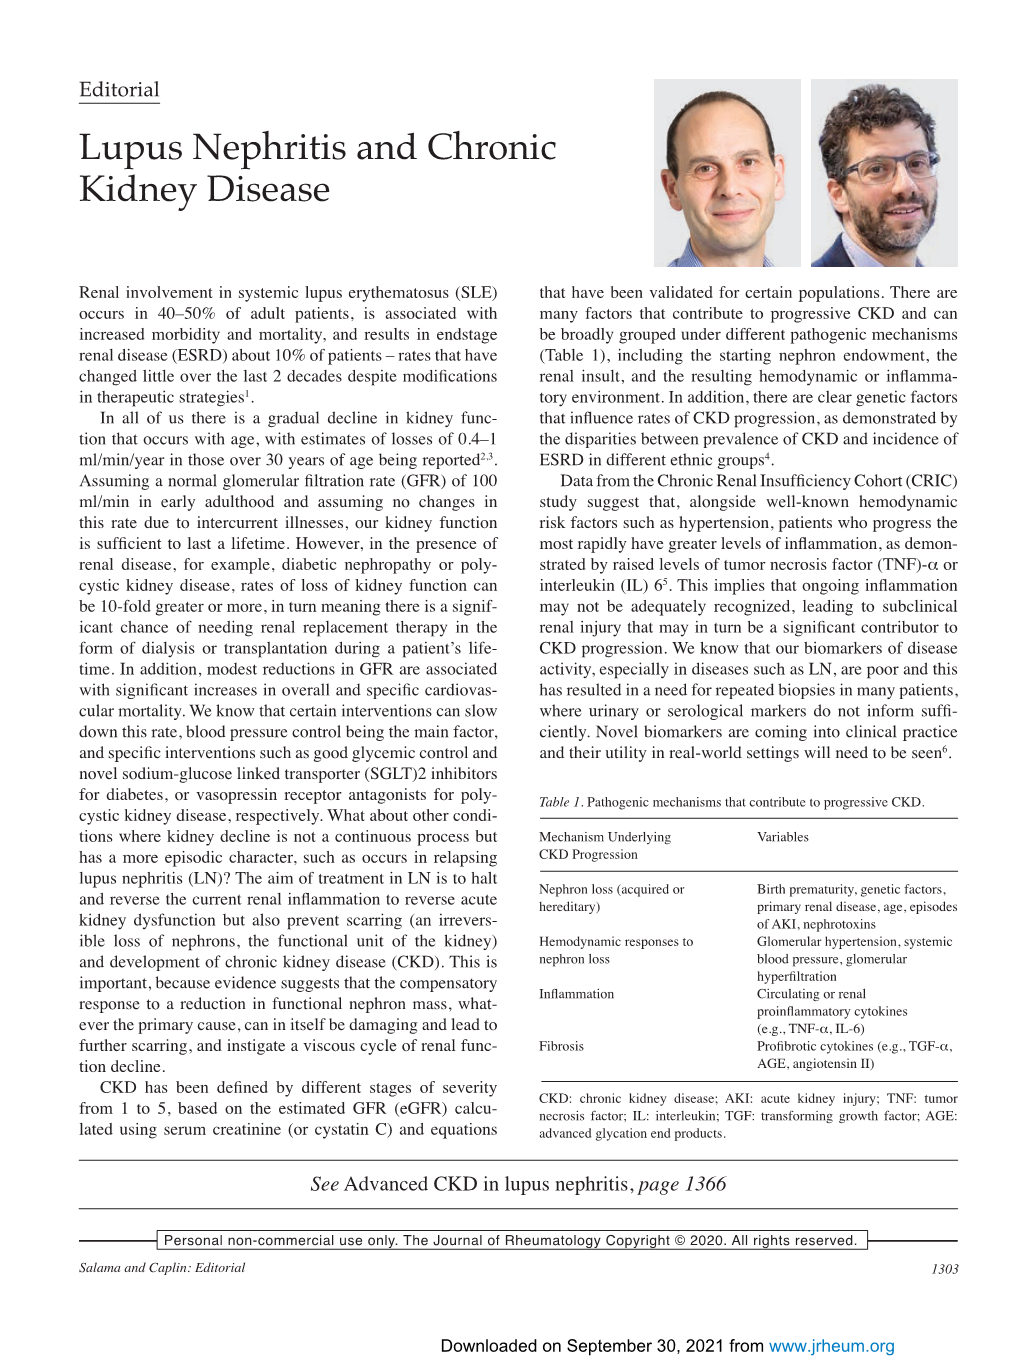 Lupus Nephritis and Chronic Kidney Disease